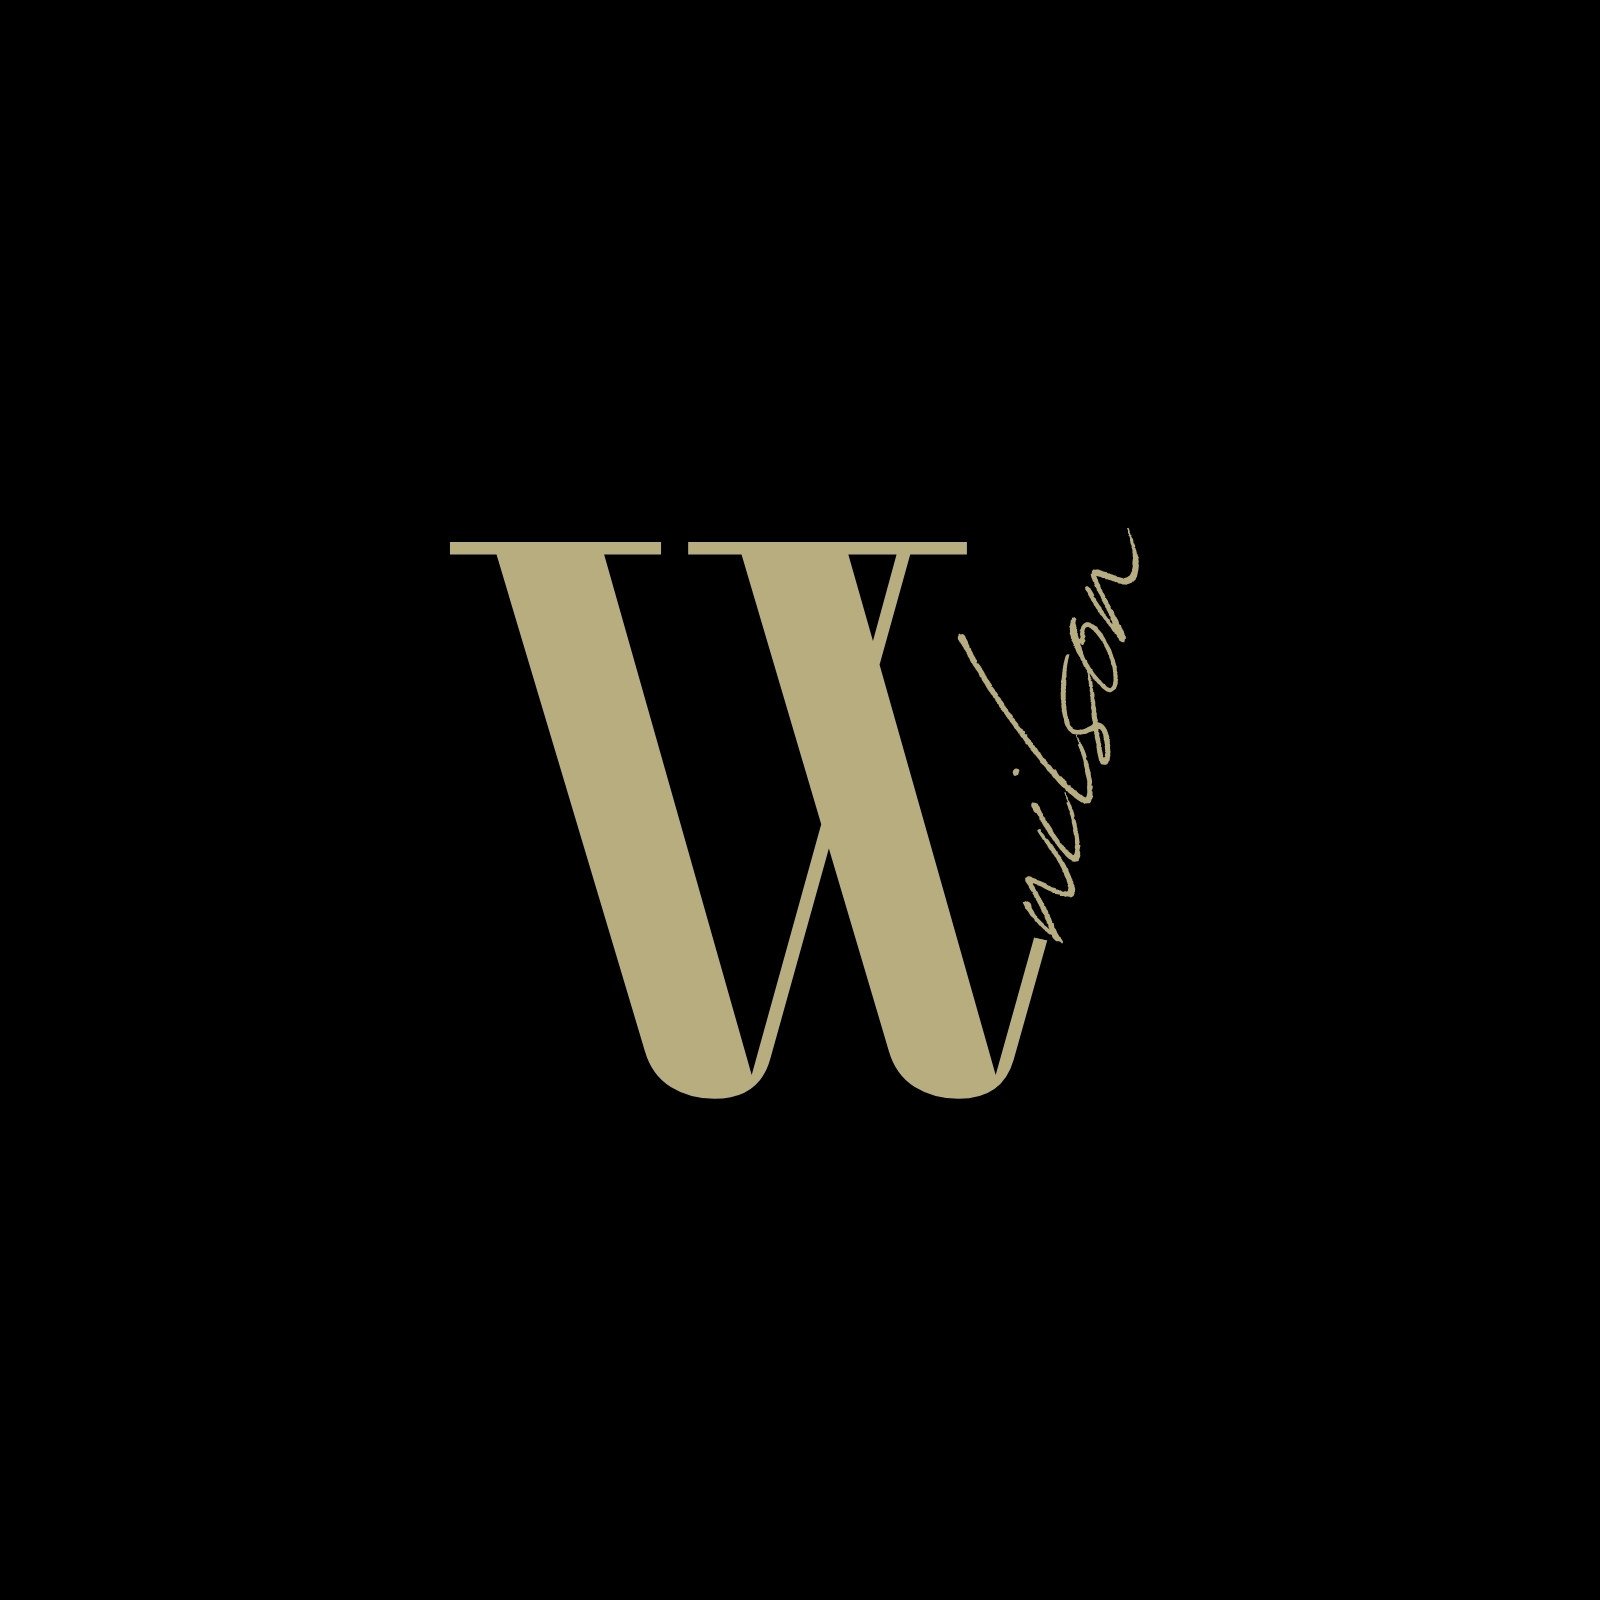 Wedding Initial MM Monogram And Elegant Logo Design, With Floral